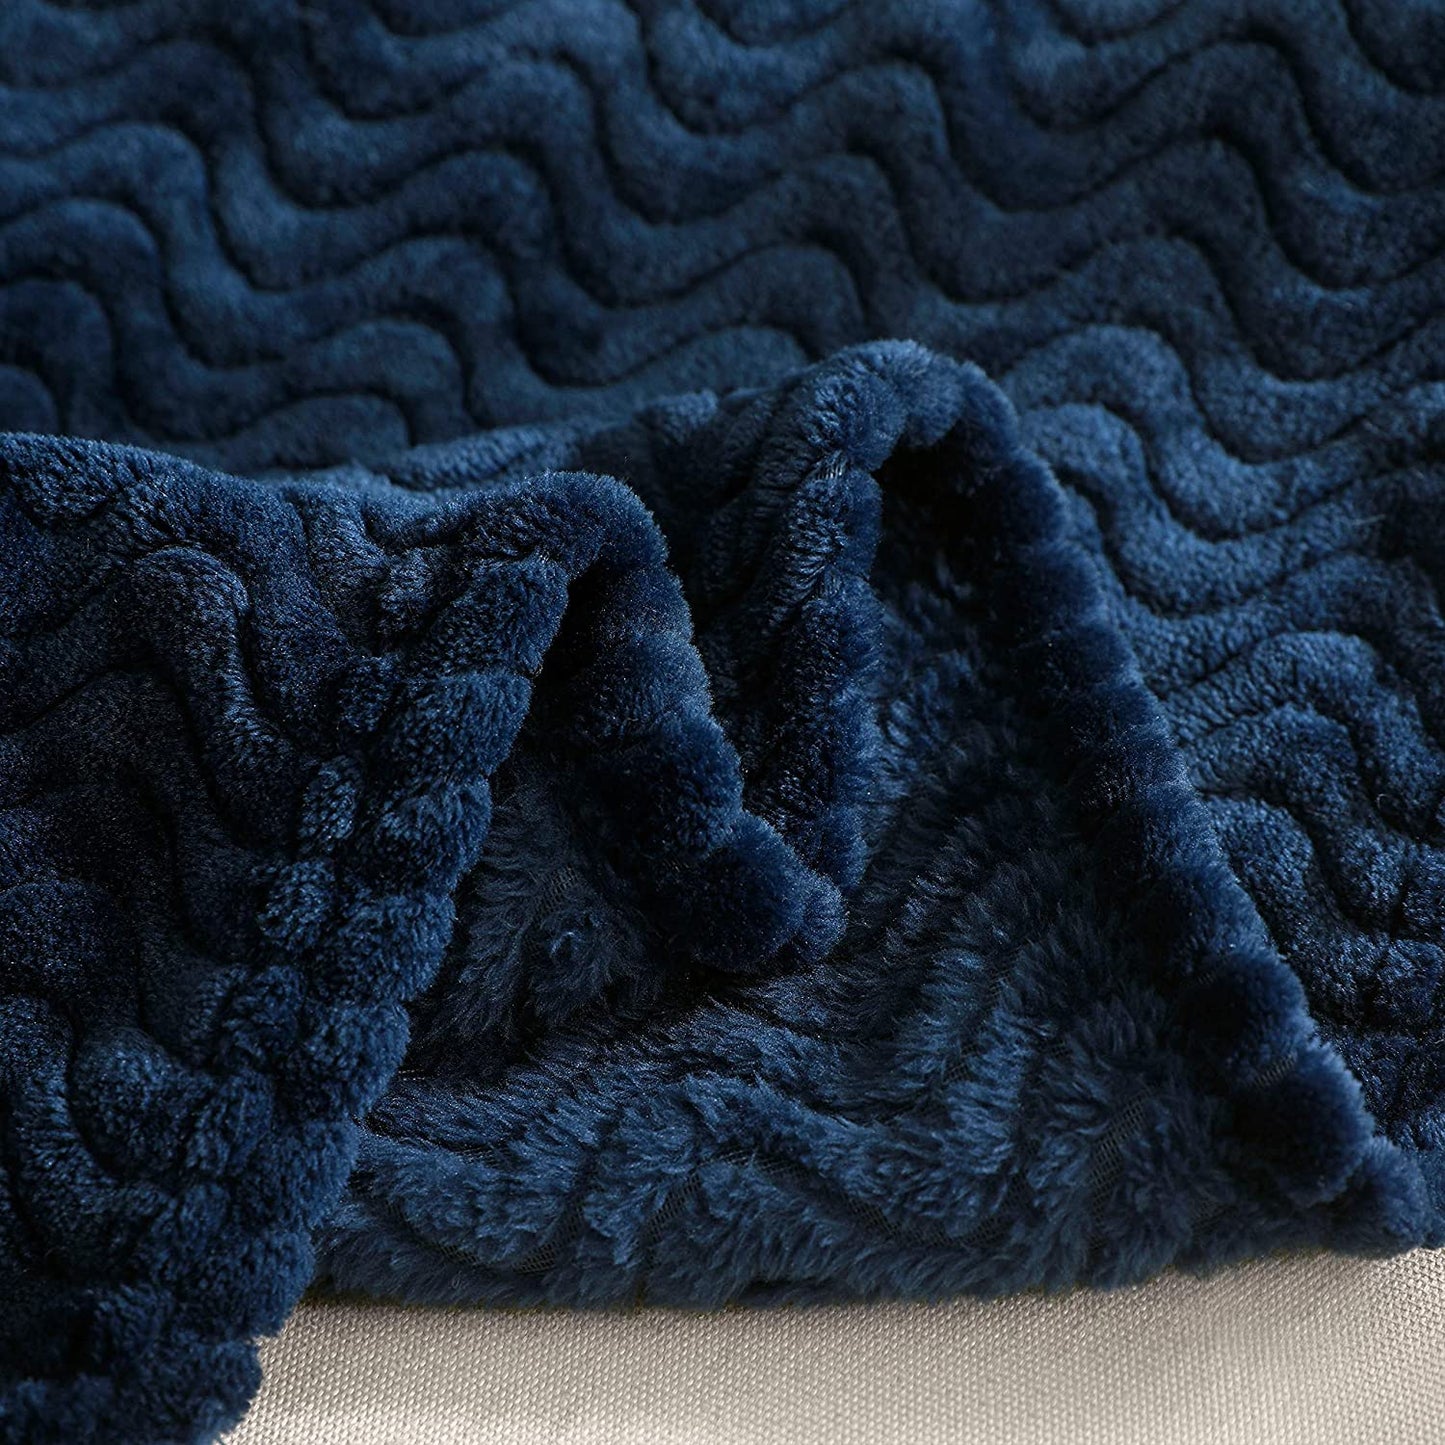 Exclusivo Mezcla Large Flannel Fleece Throw Blanket, Jacquard Weave Wave Pattern (50" x 70", Navy Blue) - Soft, Warm, Lightweight and Decorative